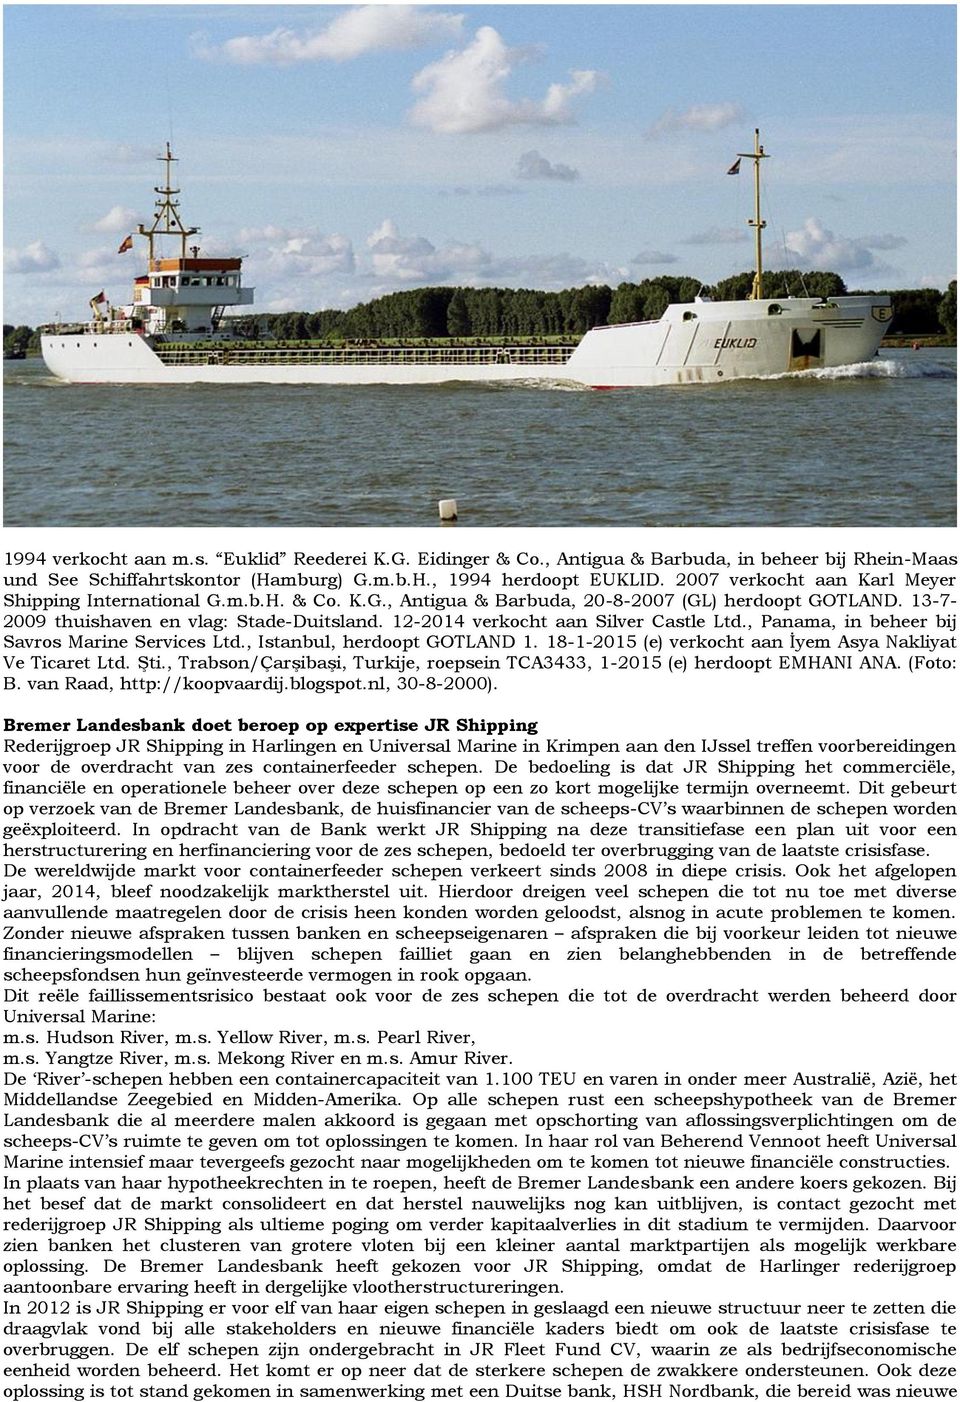 12-2014 verkocht aan Silver Castle Ltd., Panama, in beheer bij Savros Marine Services Ltd., Istanbul, herdoopt GOTLAND 1. 18-1-2015 (e) verkocht aan İyem Asya Nakliyat Ve Ticaret Ltd. Şti.